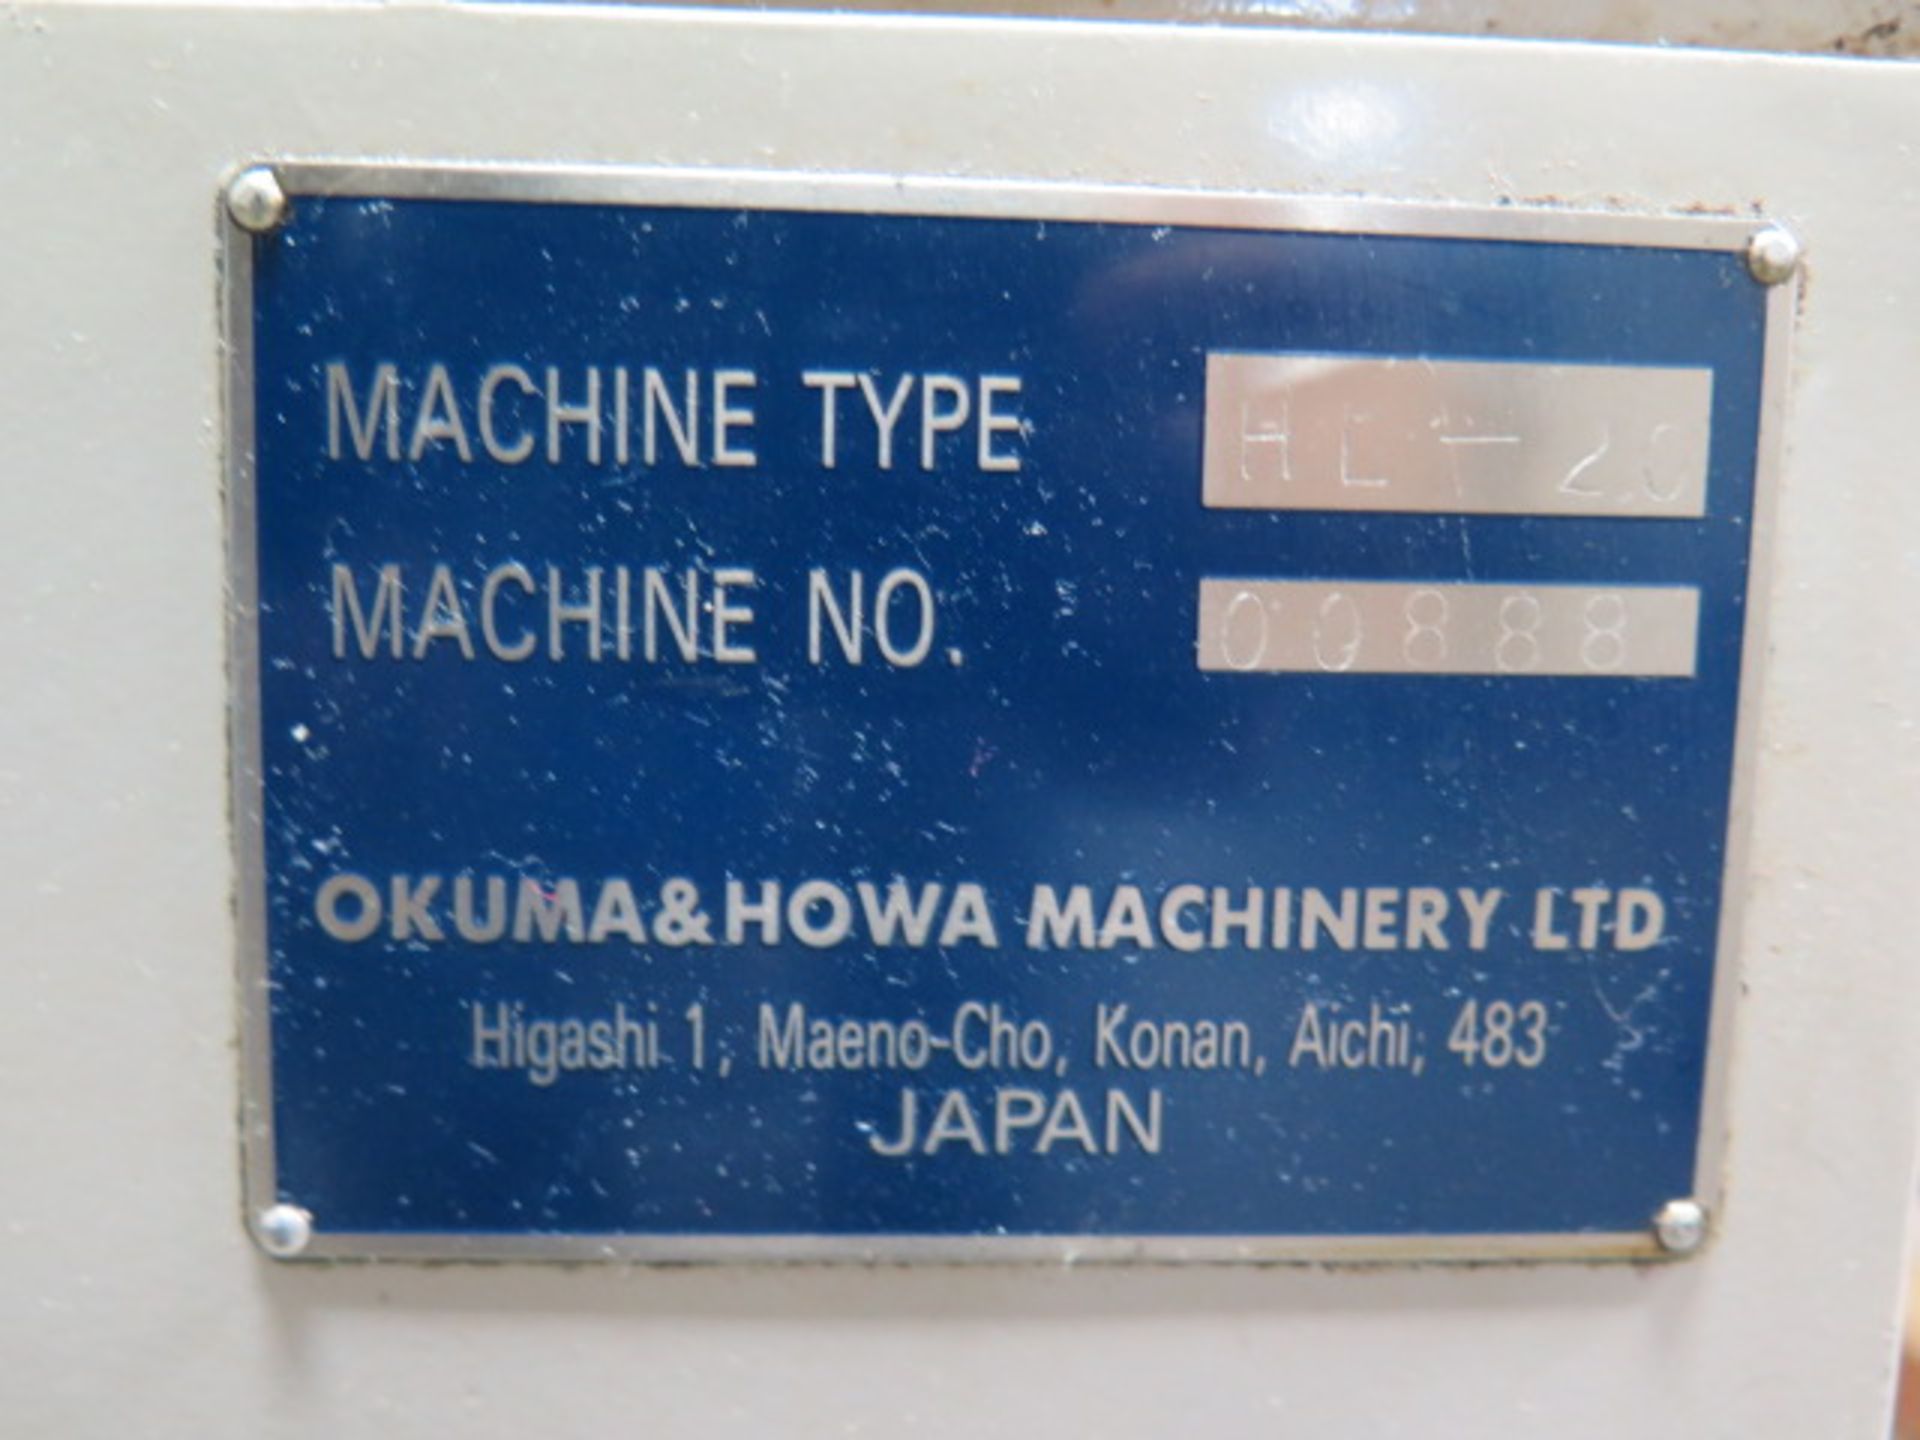 Okuma & Howa HL-20 CNC Turning Center s/n 00888 w/ Fanuc 18i-T Controls, 12-Station, SOLD AS IS - Image 12 of 12